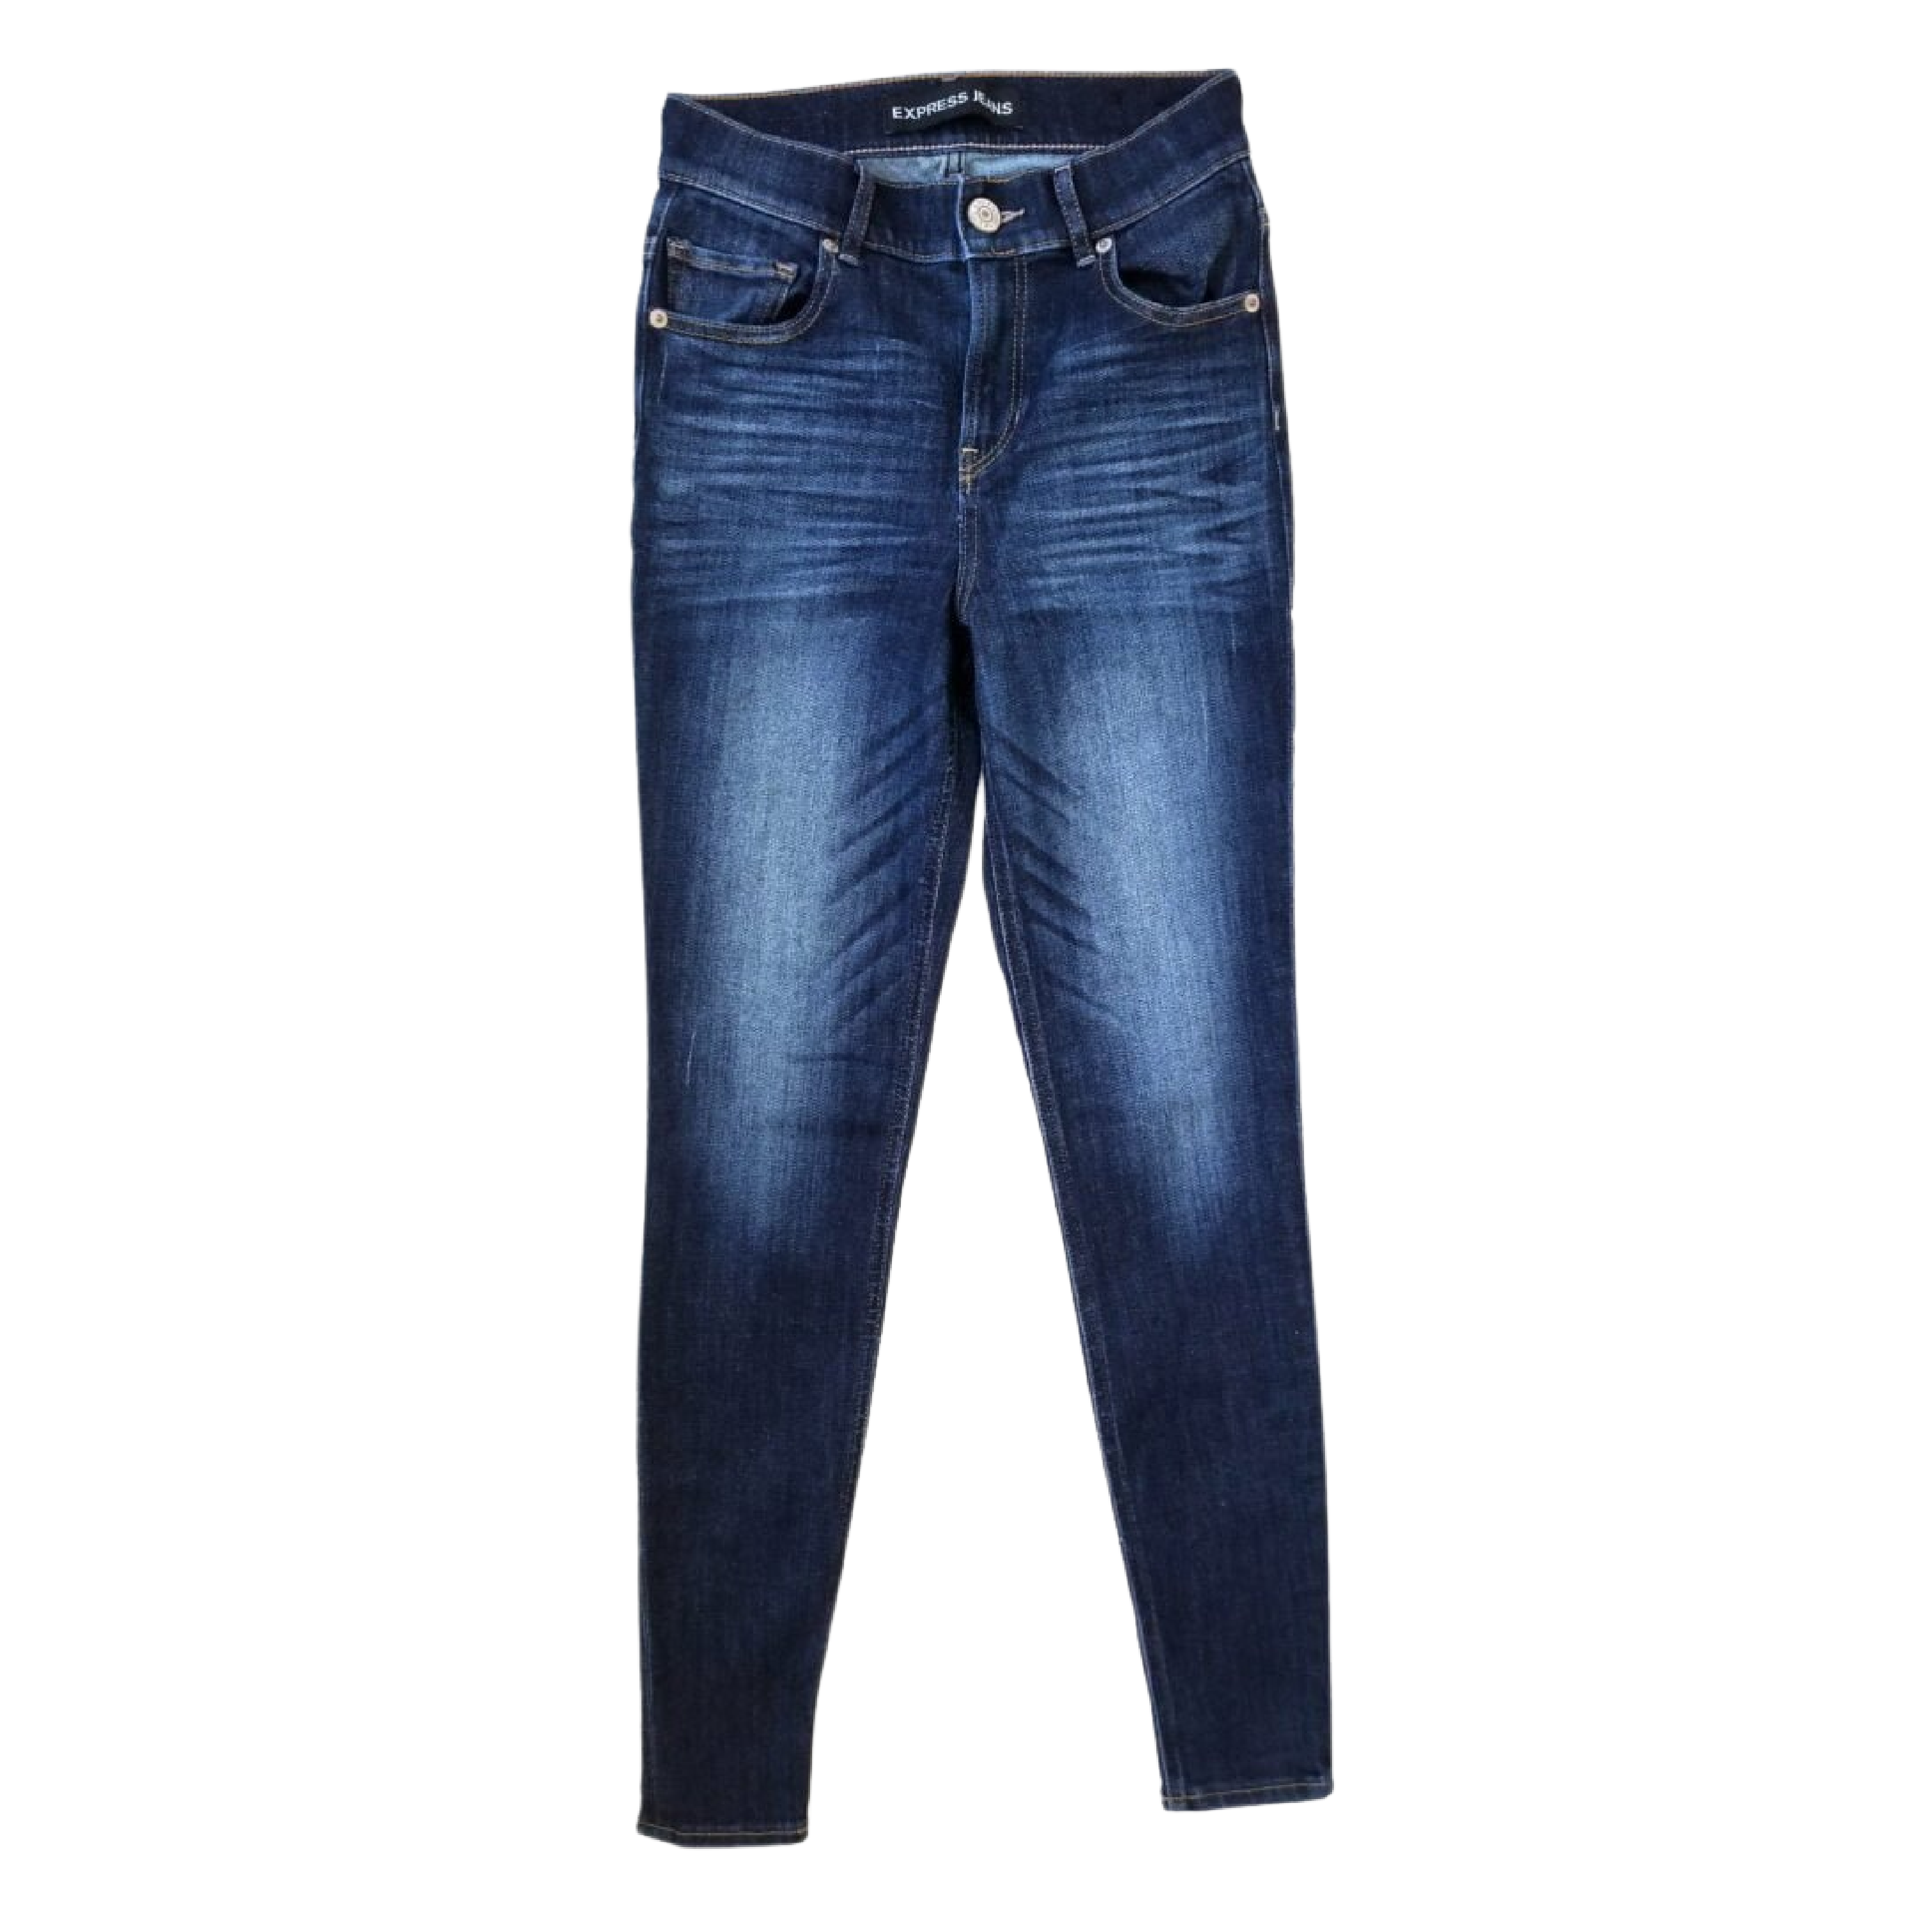 Express Jeans (Size 2R) • BrynnZilla